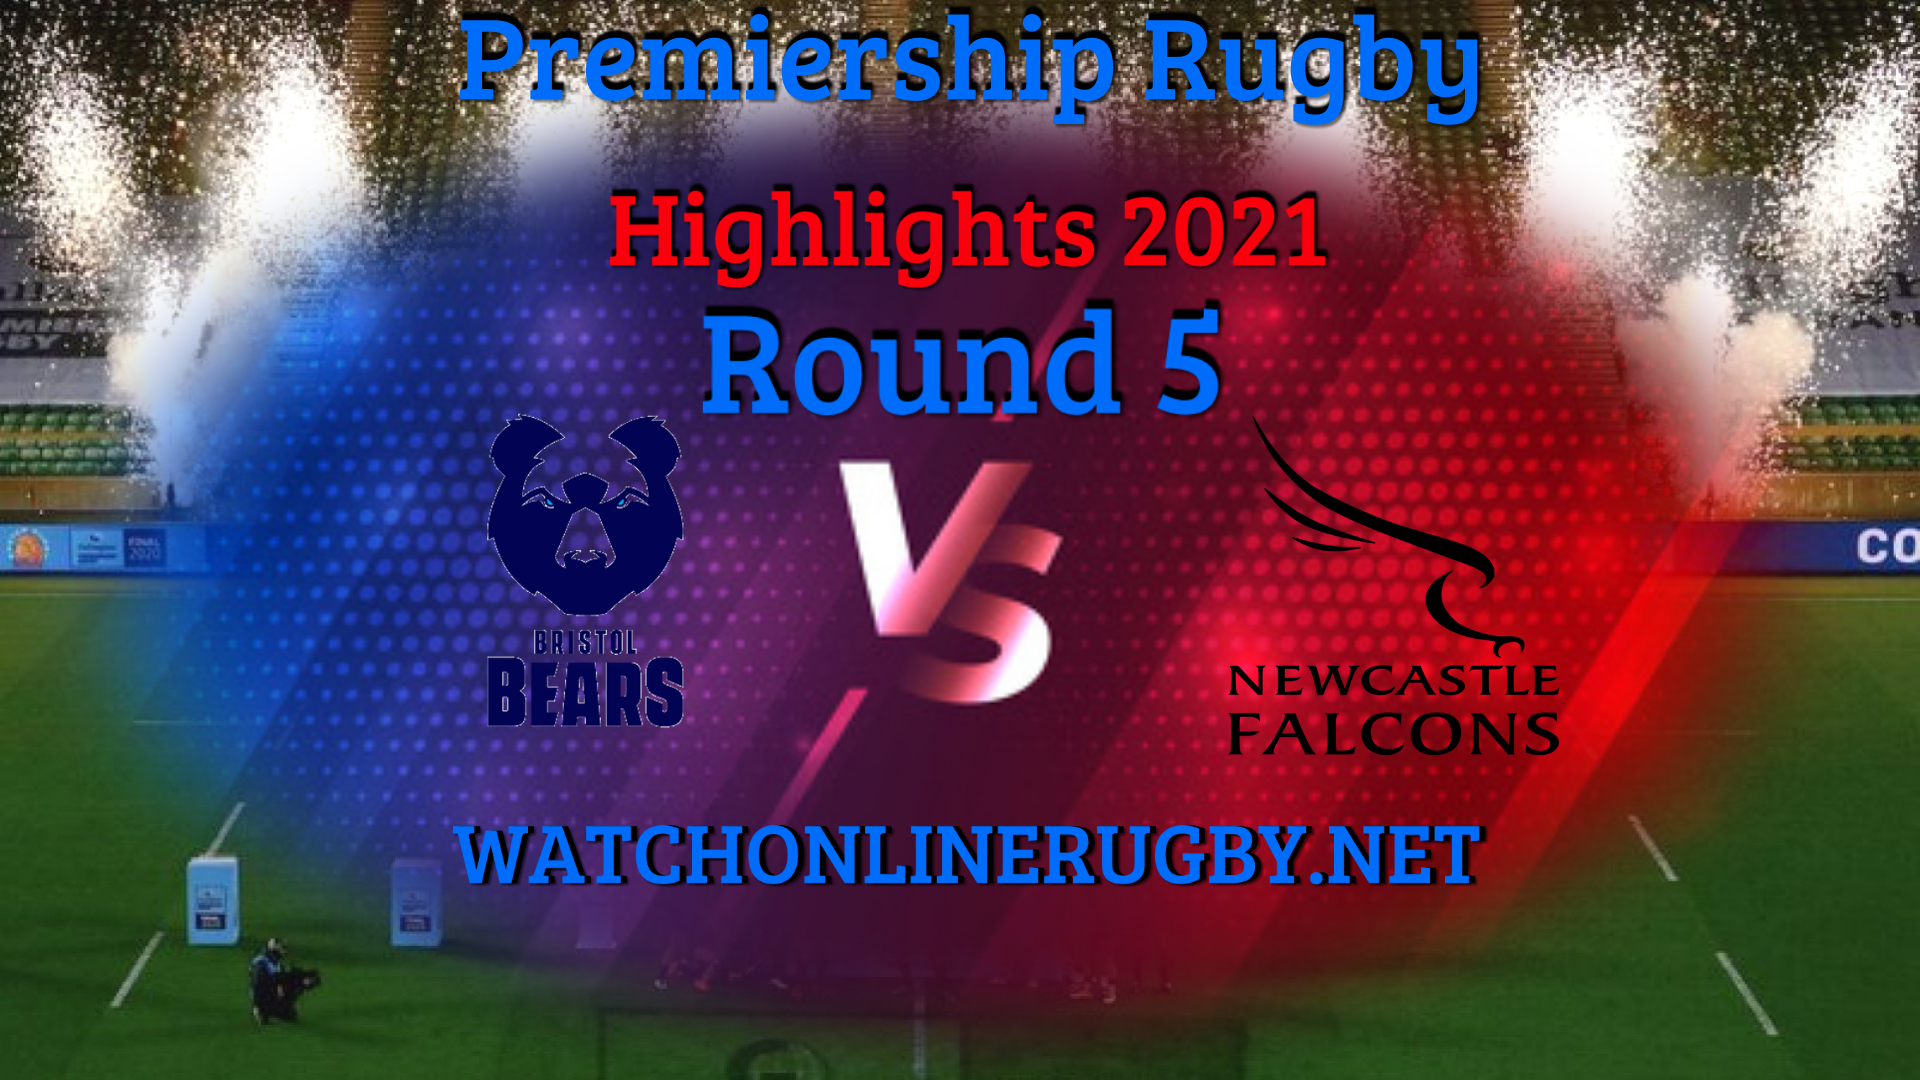 Bristol Bears VS Newcastle Falcons Premiership Rugby 2021 RD 5